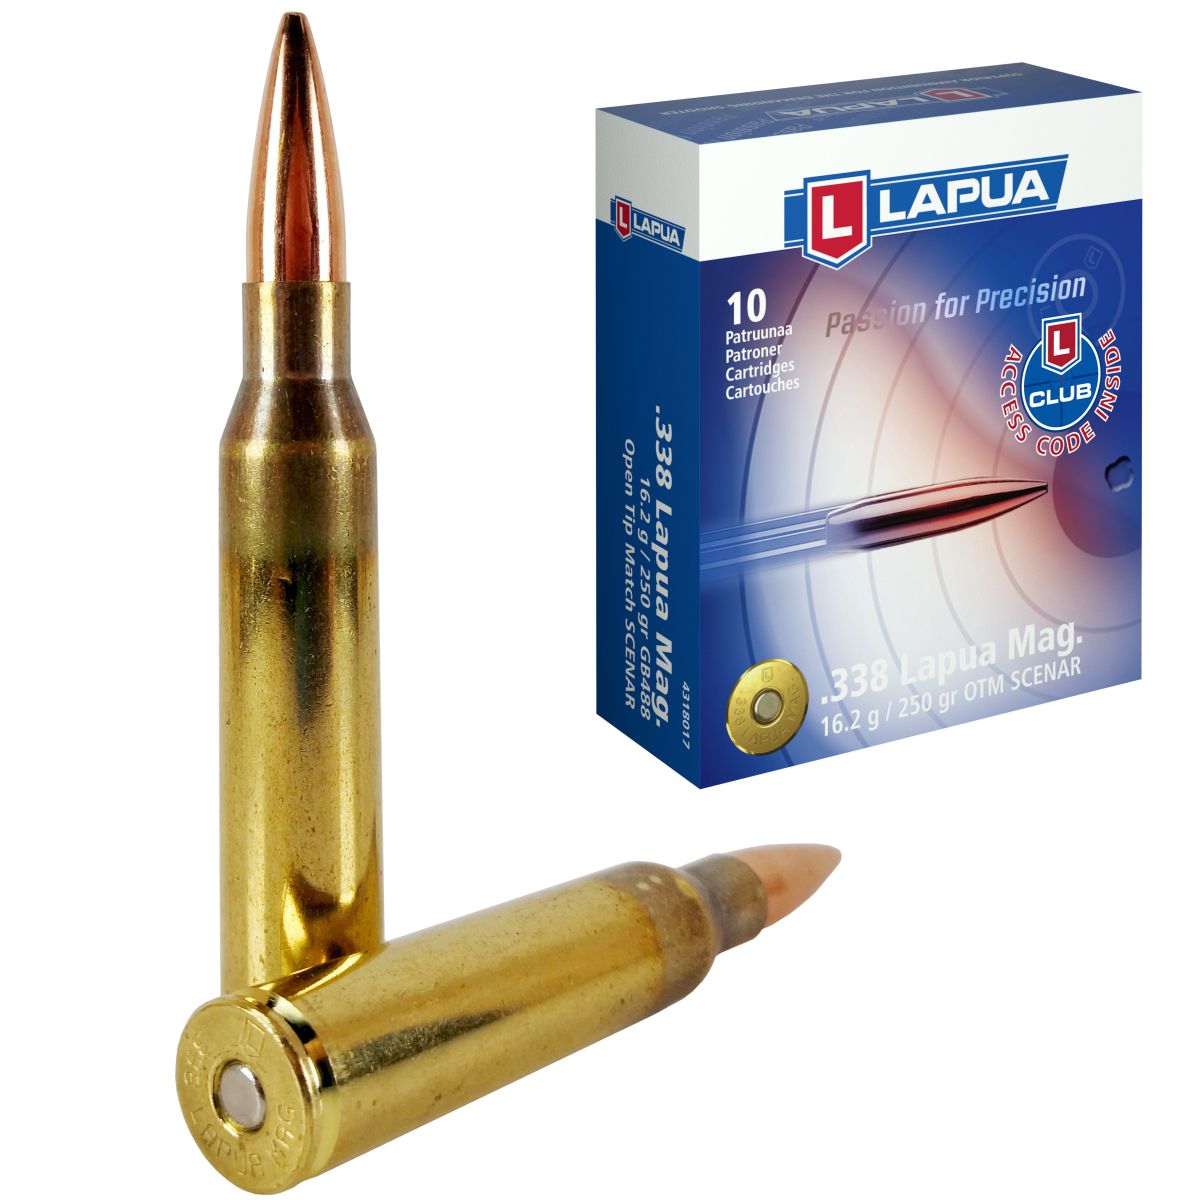 Náboj Lapua .338 Lapua Magnum SCENAR, GB528, OTM, 19,44 g, 300 gr